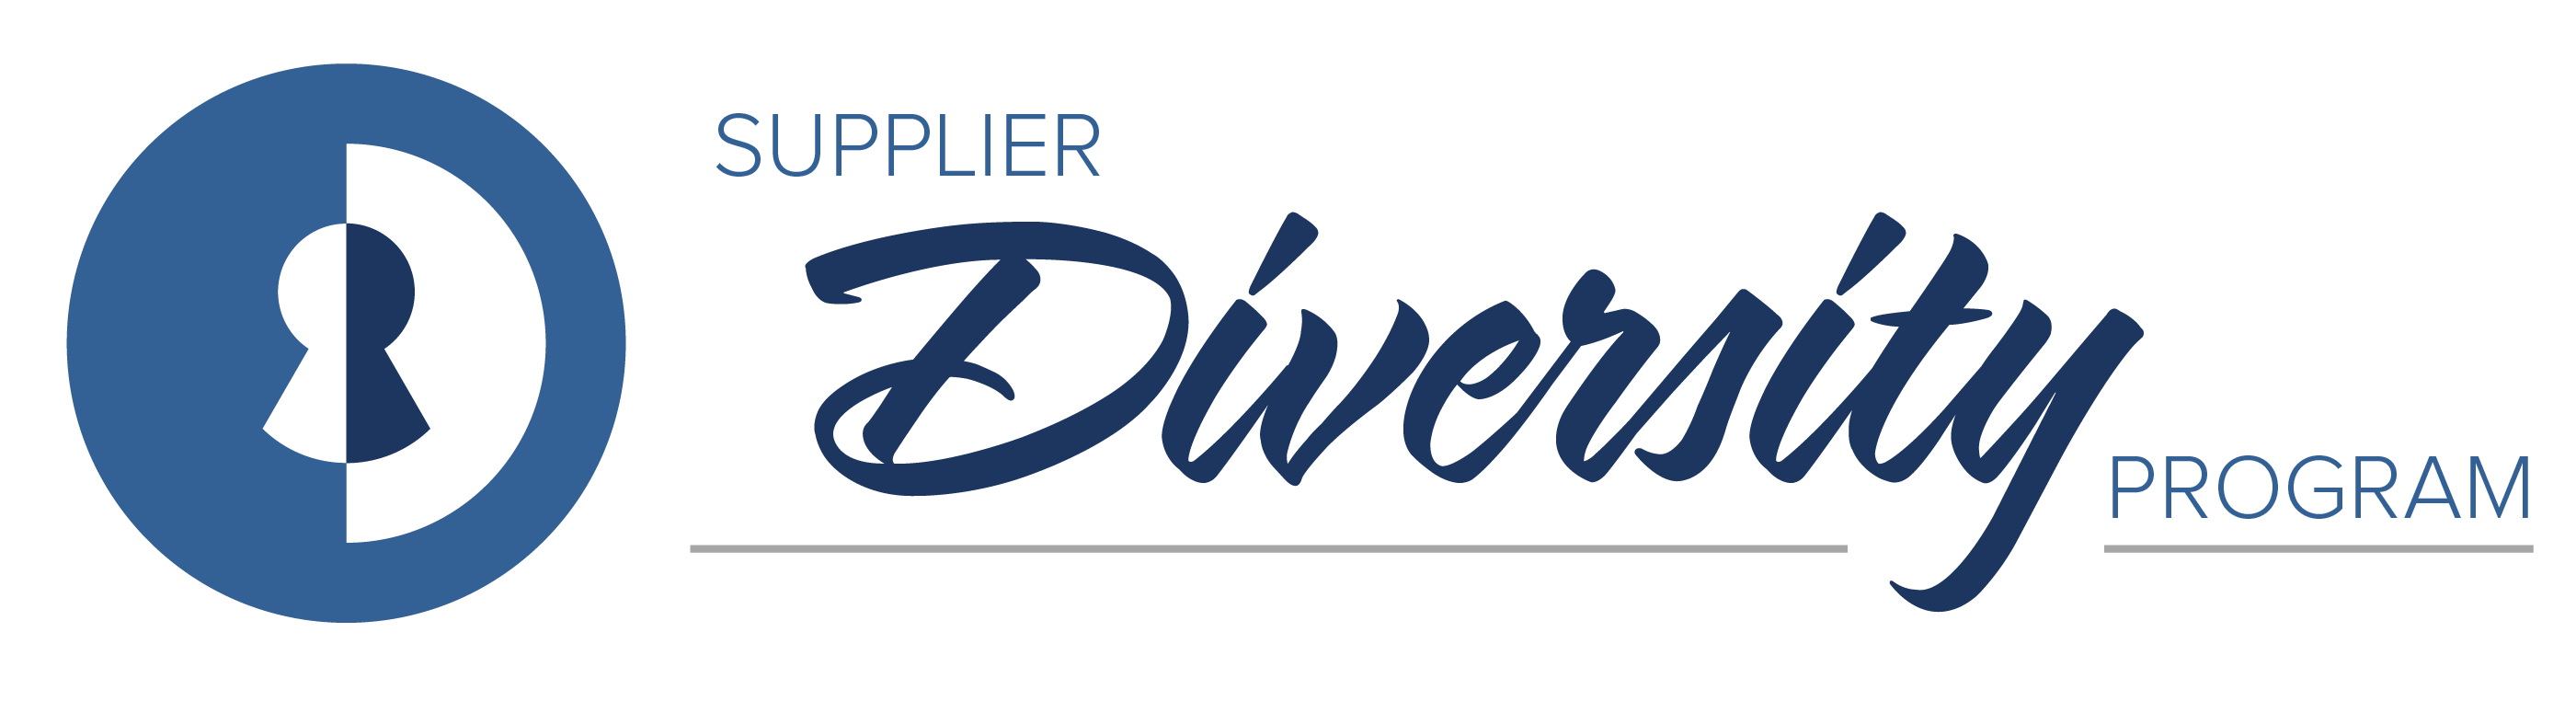 Supplier Diversity Program_logo w text.png